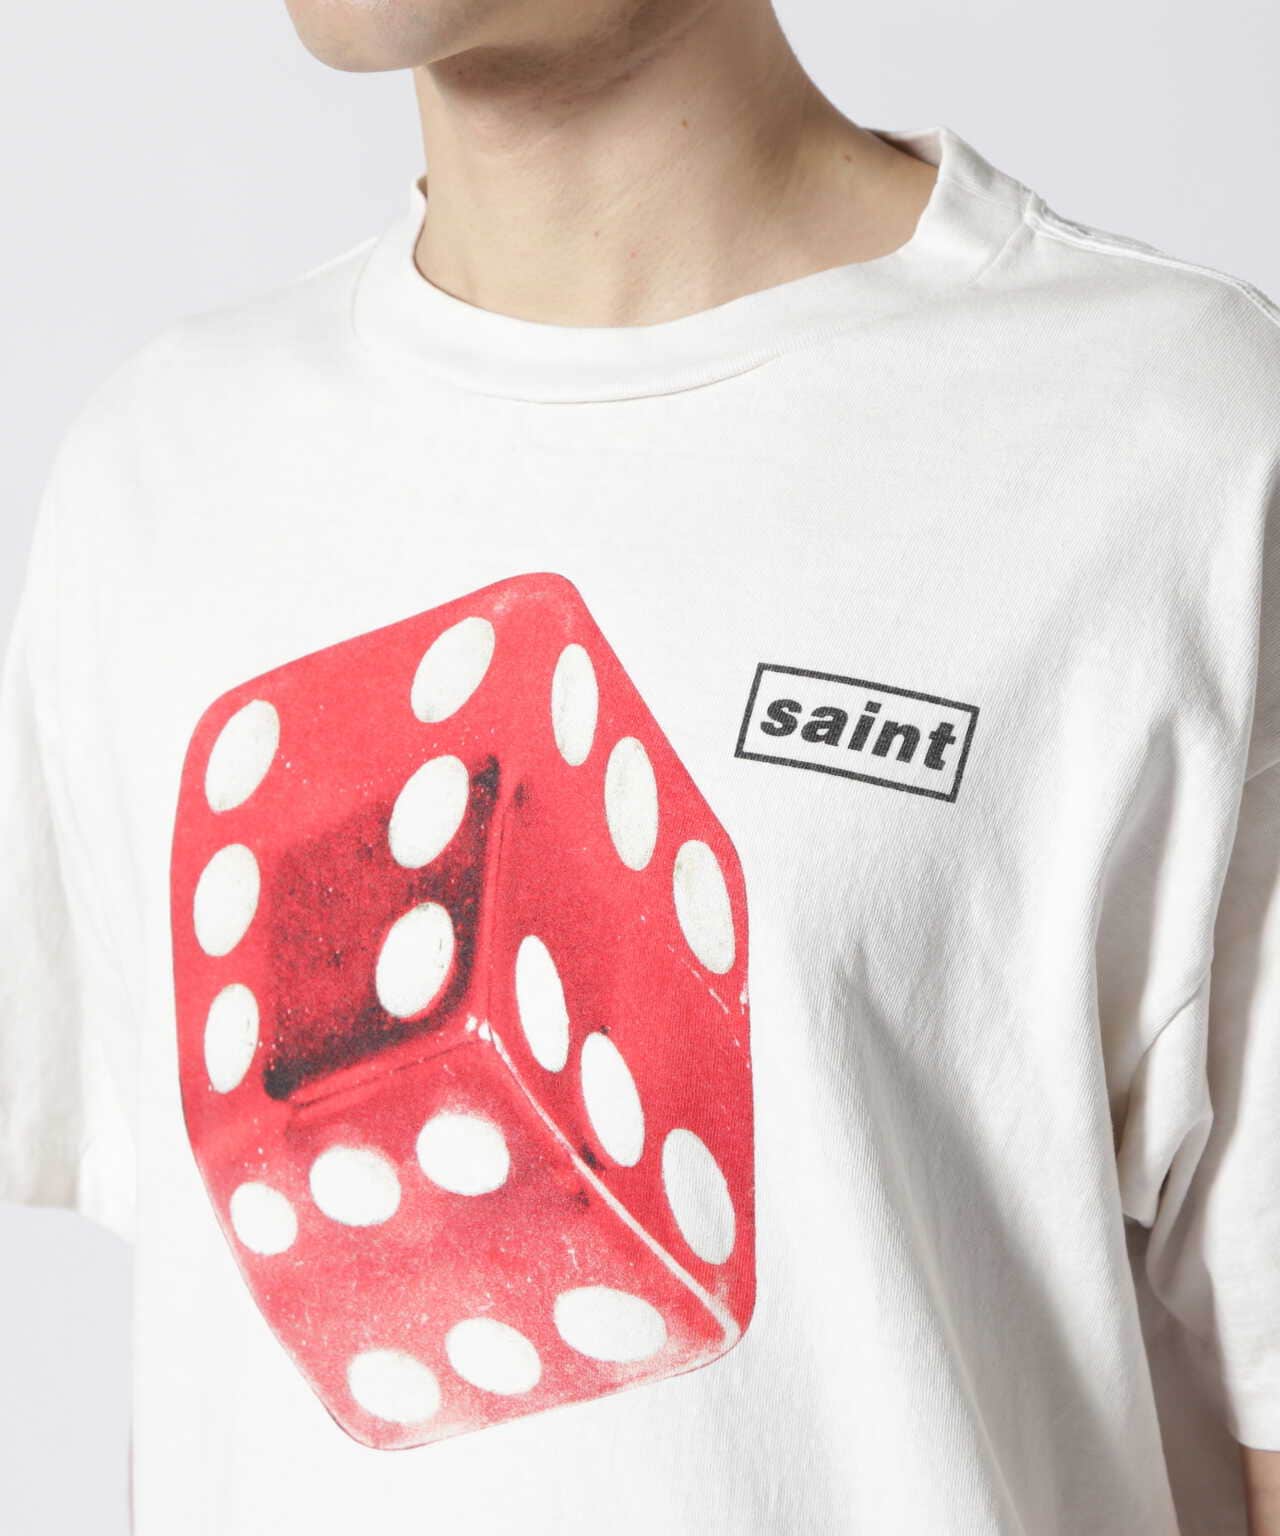 SAINT Mxxxxxx セントマイケル ダイス DICE Tシャツ-